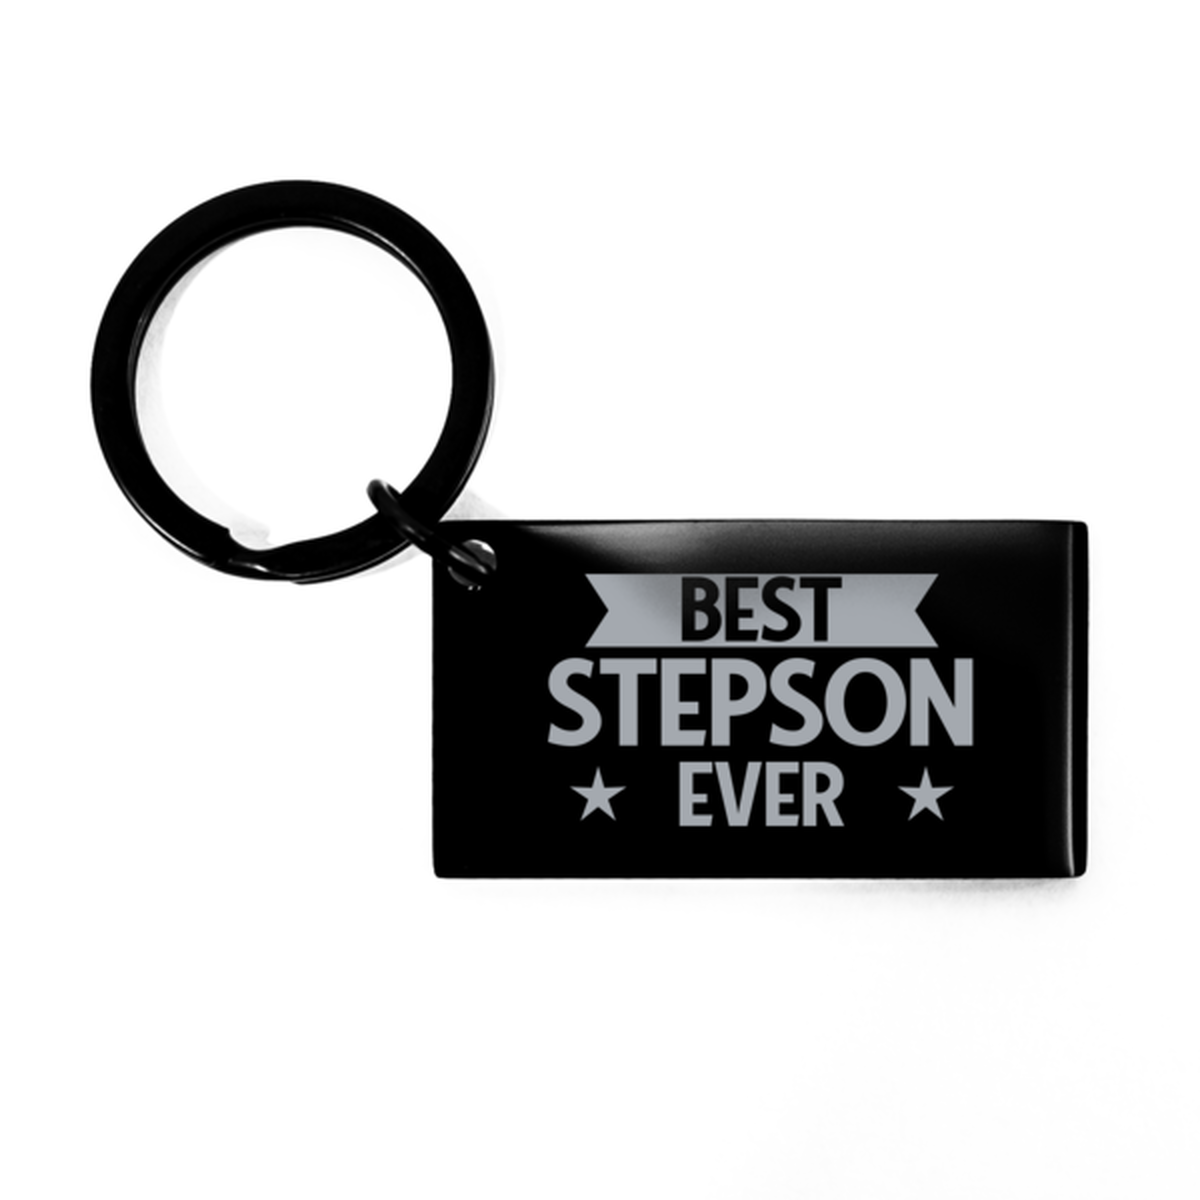 Best Stepson Ever Stepson Gifts, Funny Black Keychain For Stepson, Birthday Engraved Keyring Presents For Men